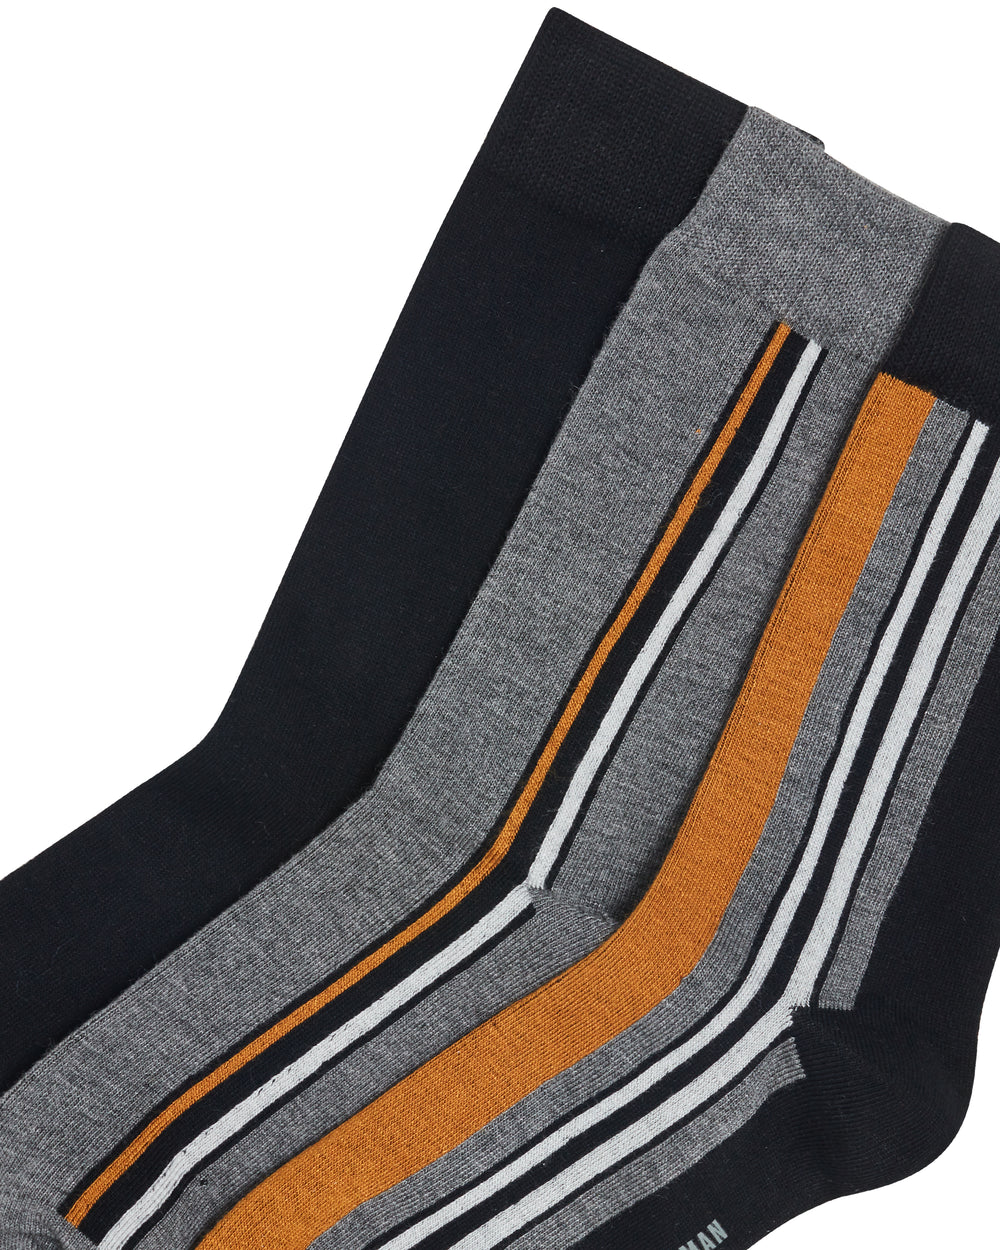 Grundy Men's 3-Pack Socks - Grey/Black/Gold Stripe